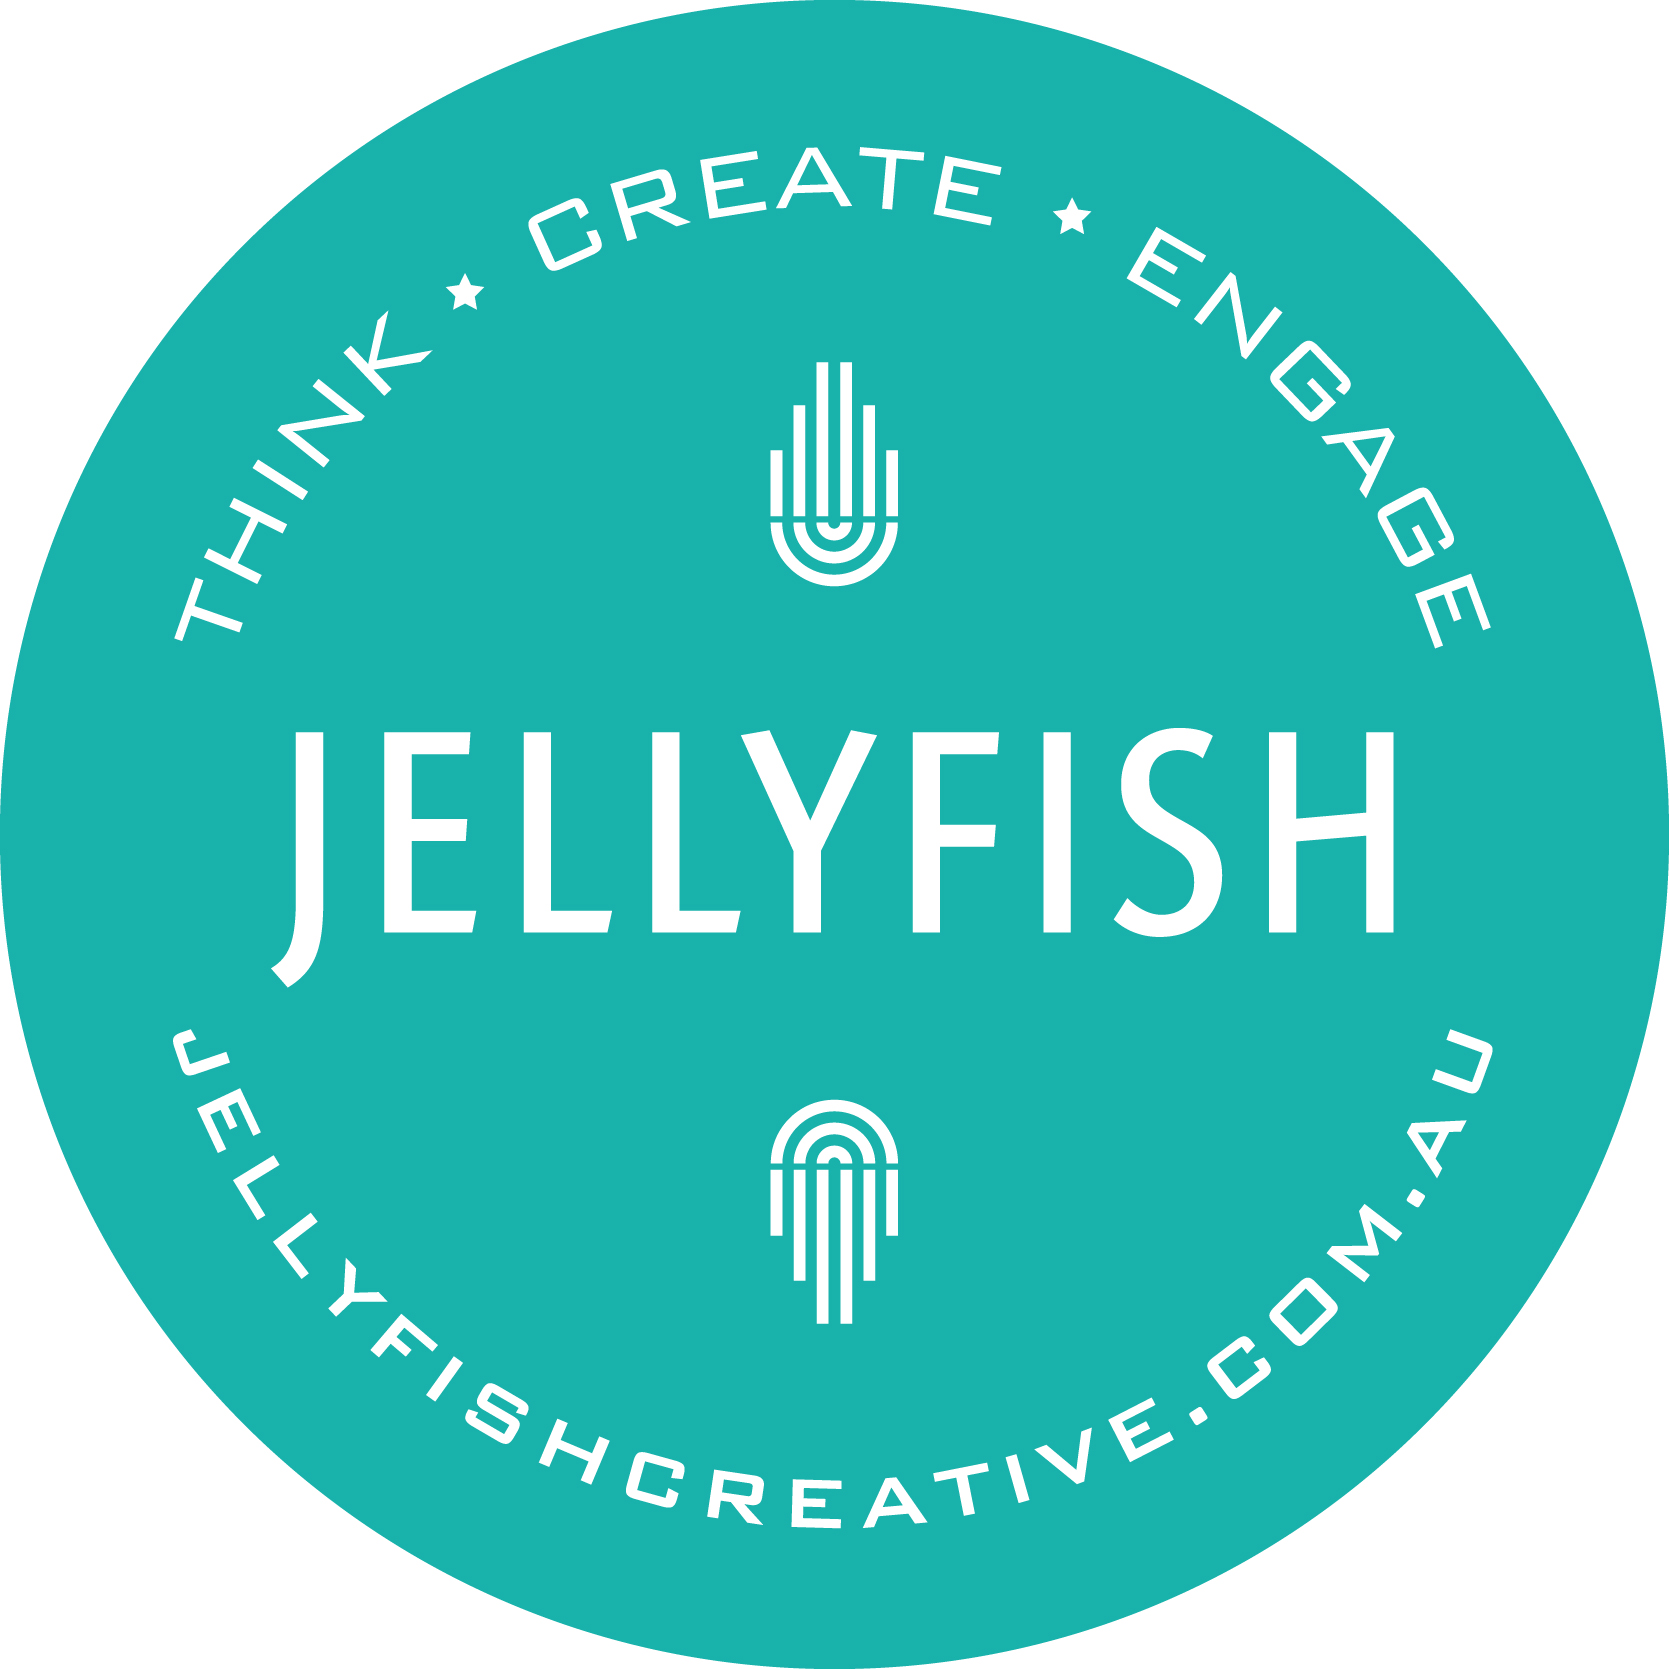 Jellyfish Creative